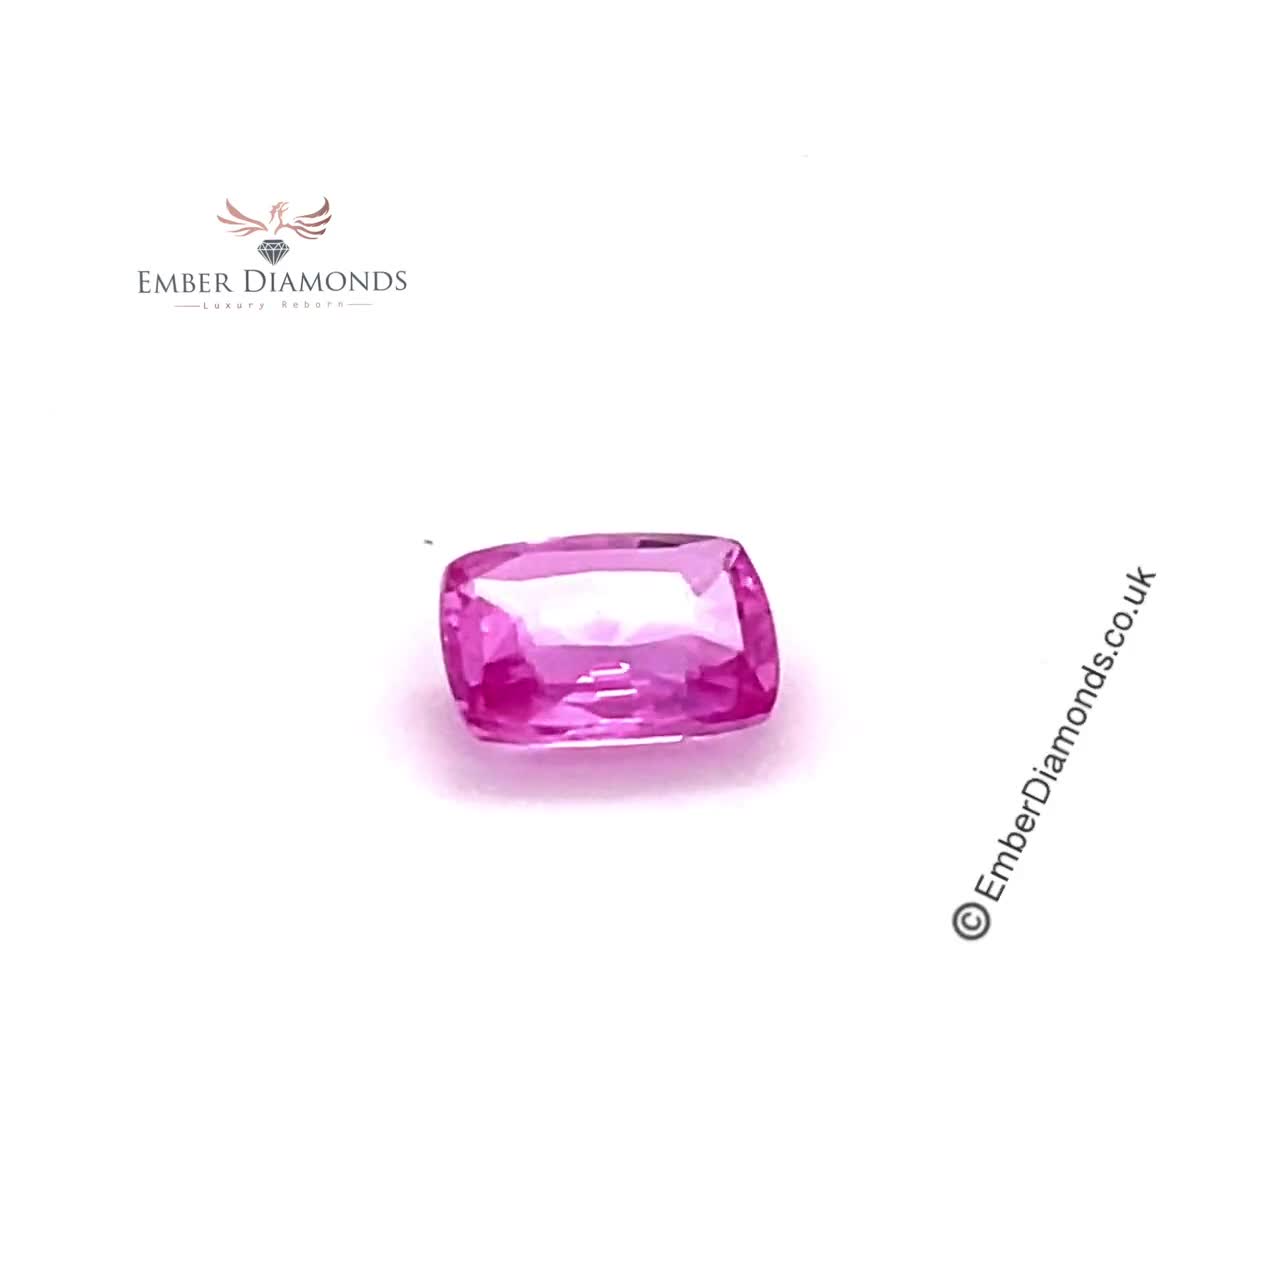 Certified, 1.54ct Natural Pink Sapphire Gemstone, Cushion Cut